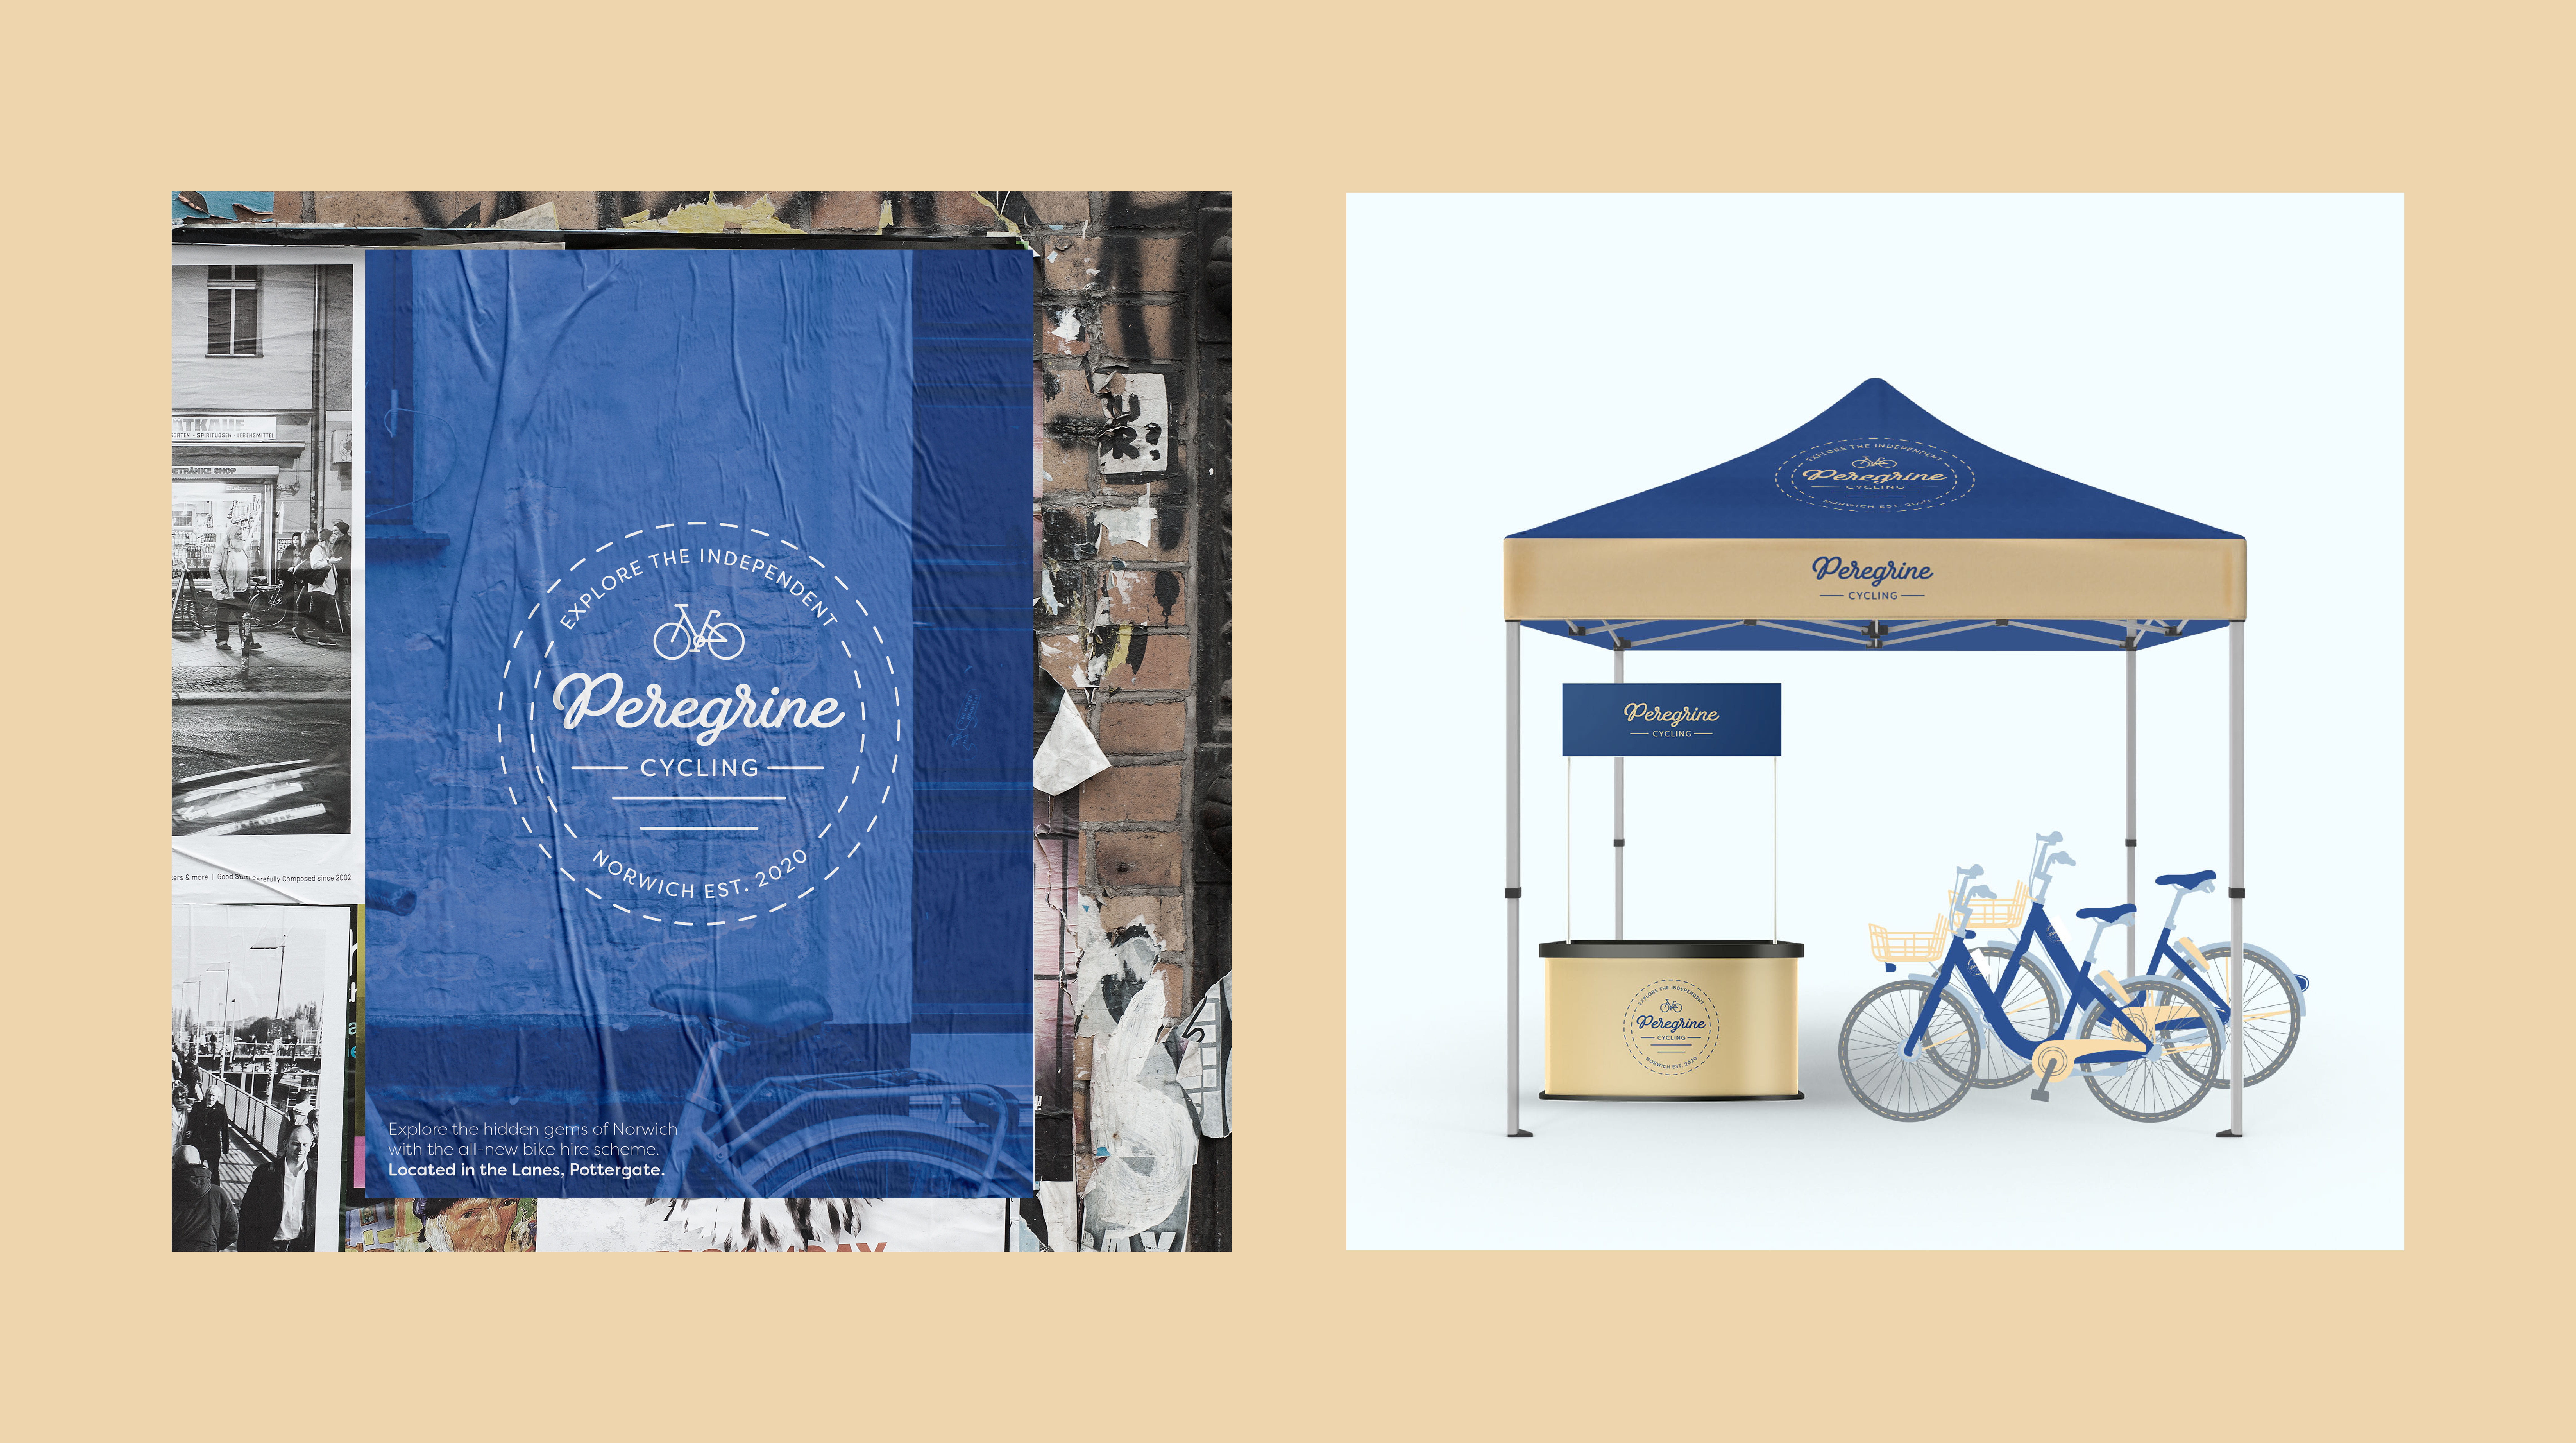 Poster design and bike kiosk.